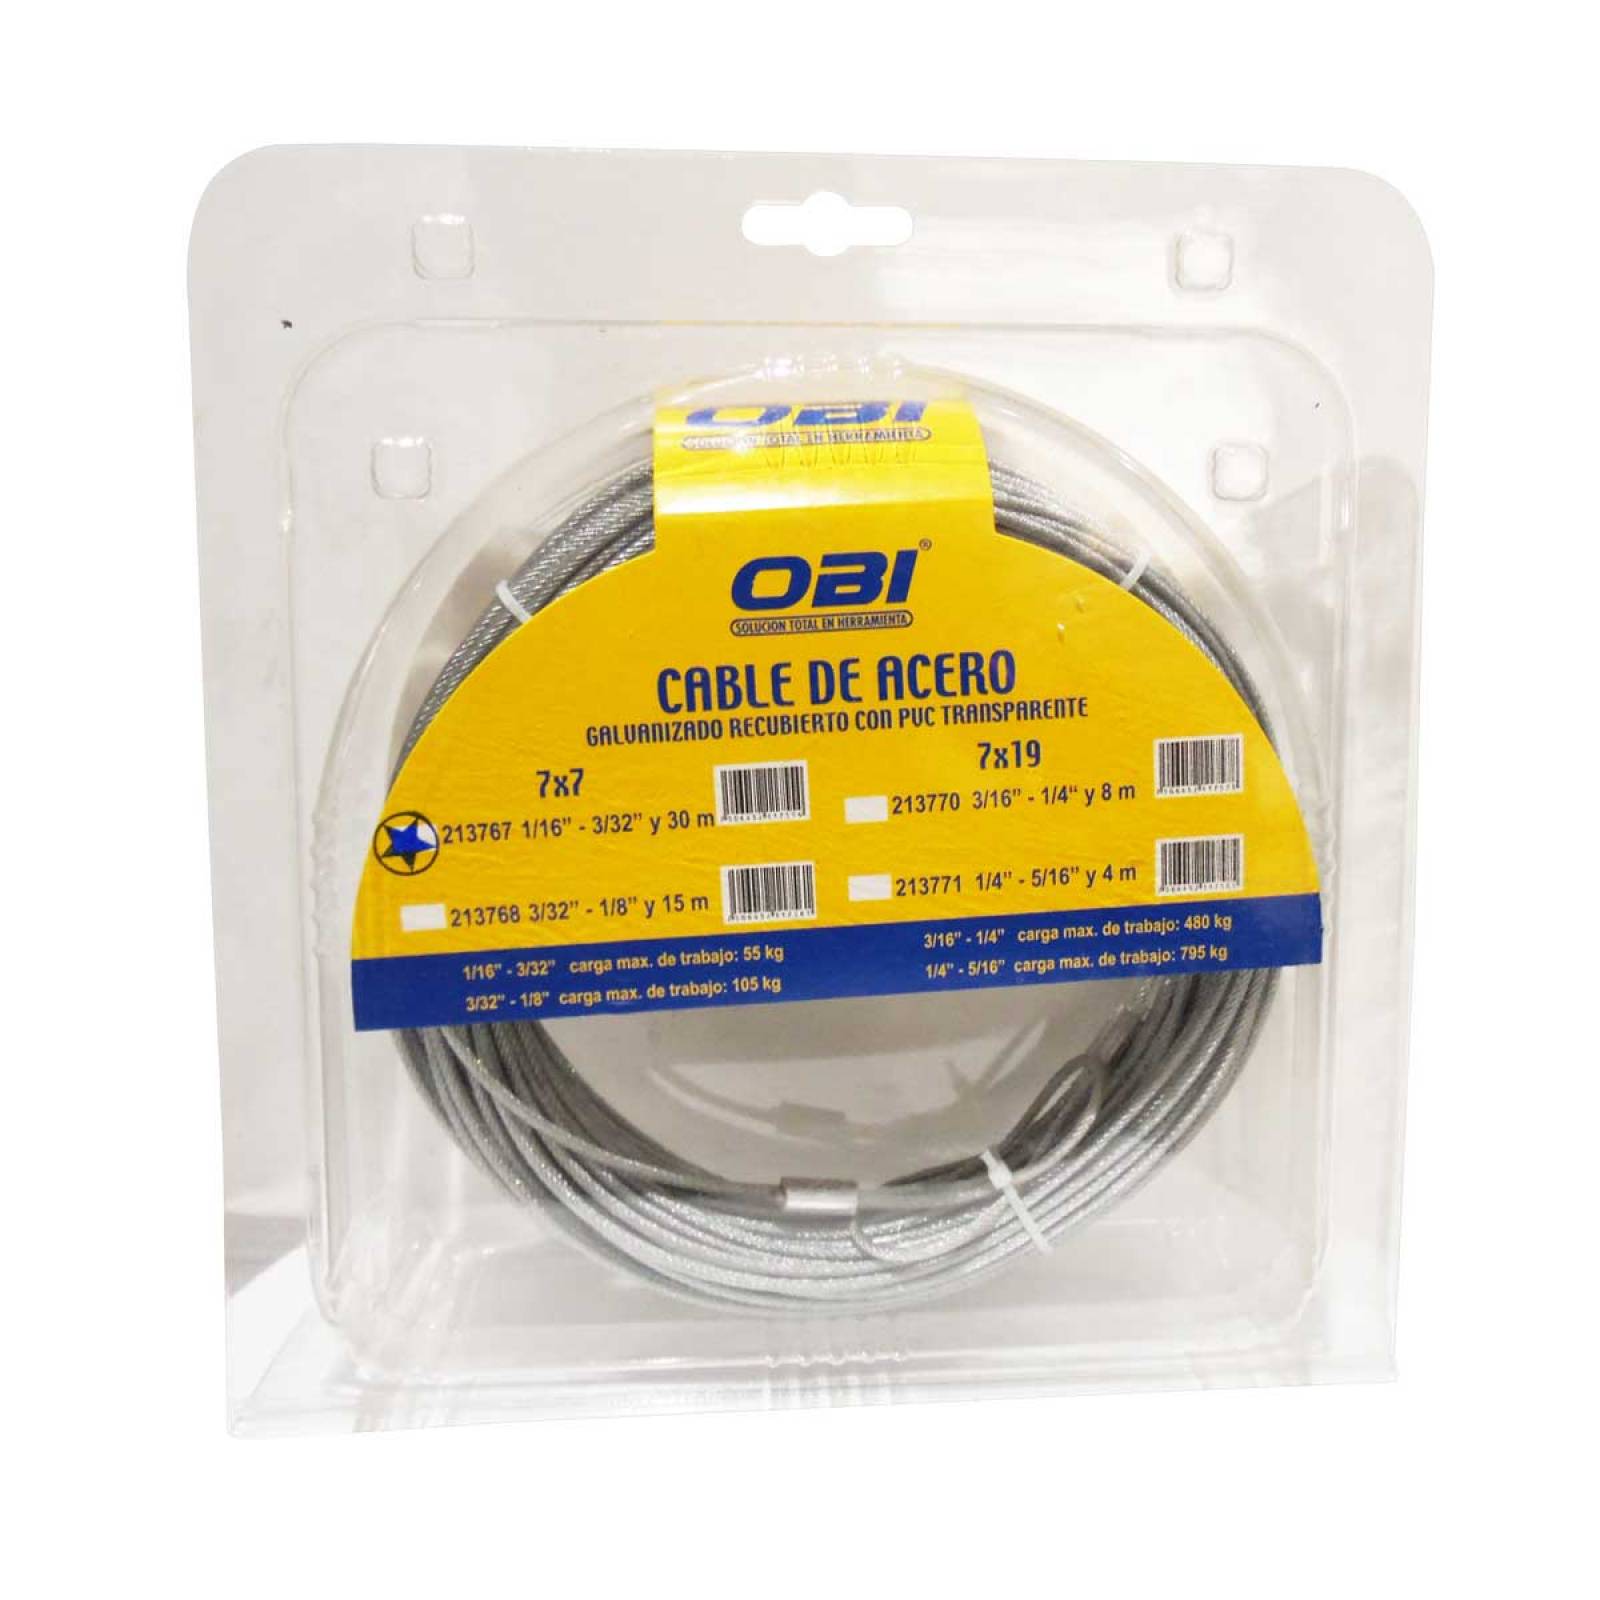 Cable De Acero Con Pvc Blister 7x7 116 332” 30 M Obi